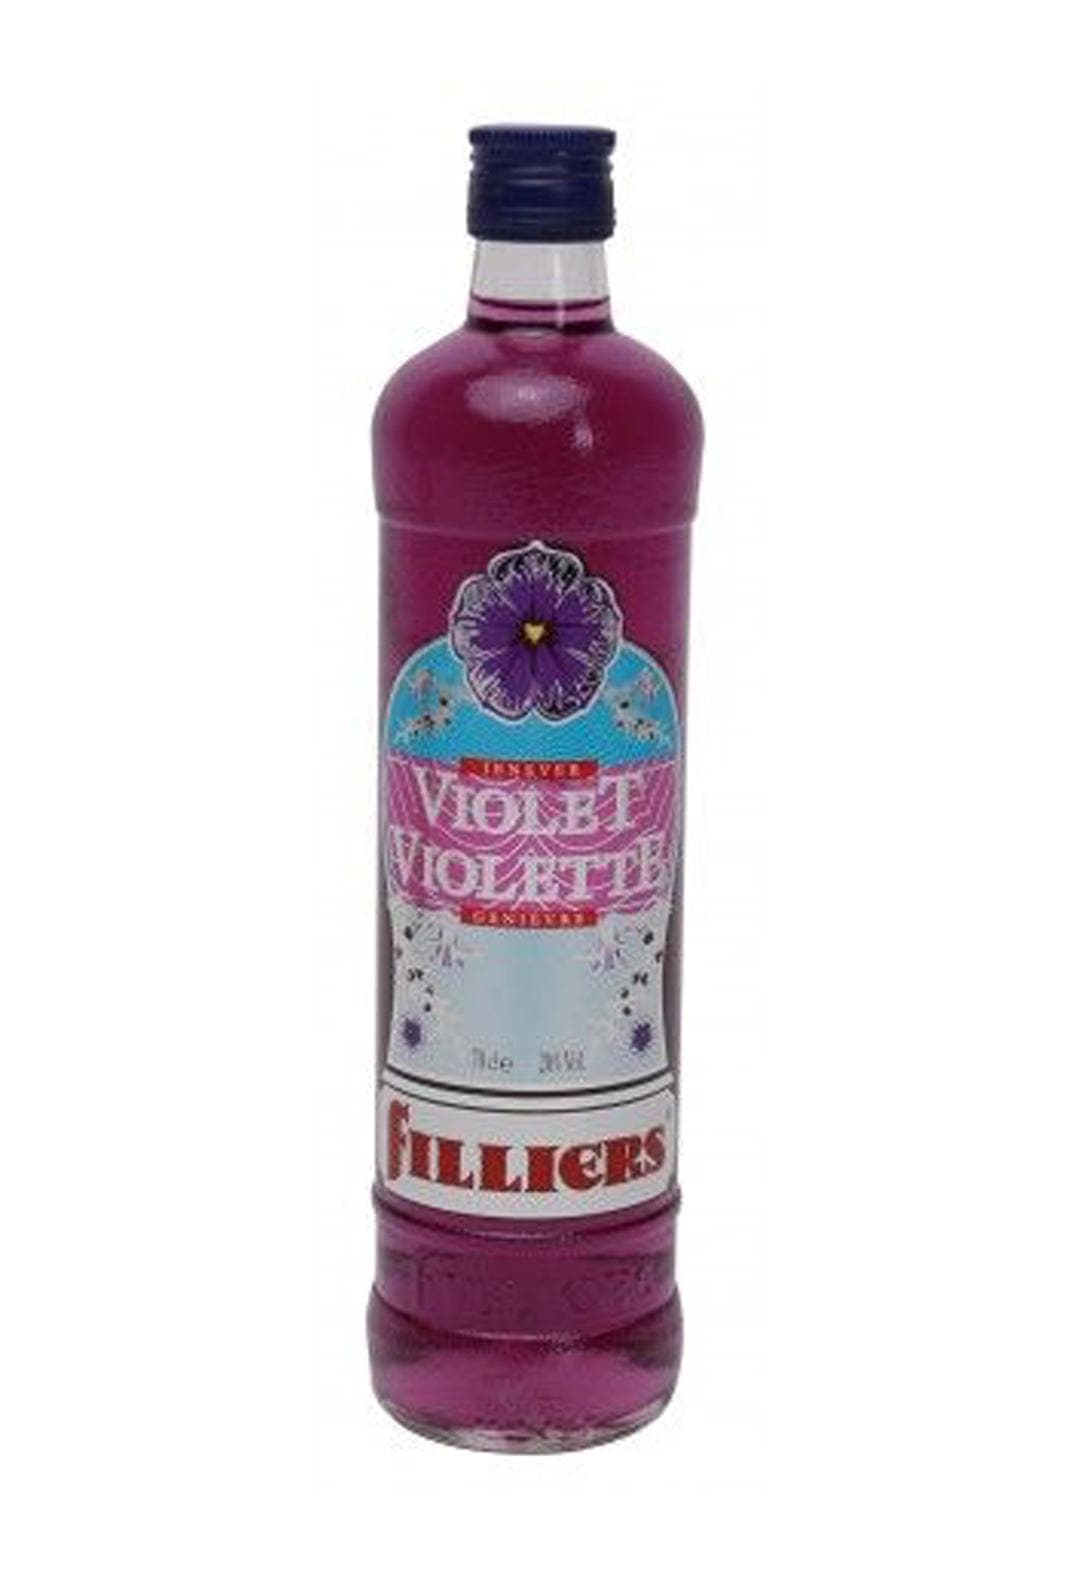 Filliers Violet Liqueur 20% 700ml | Liqueurs | Shop online at Spirits of France